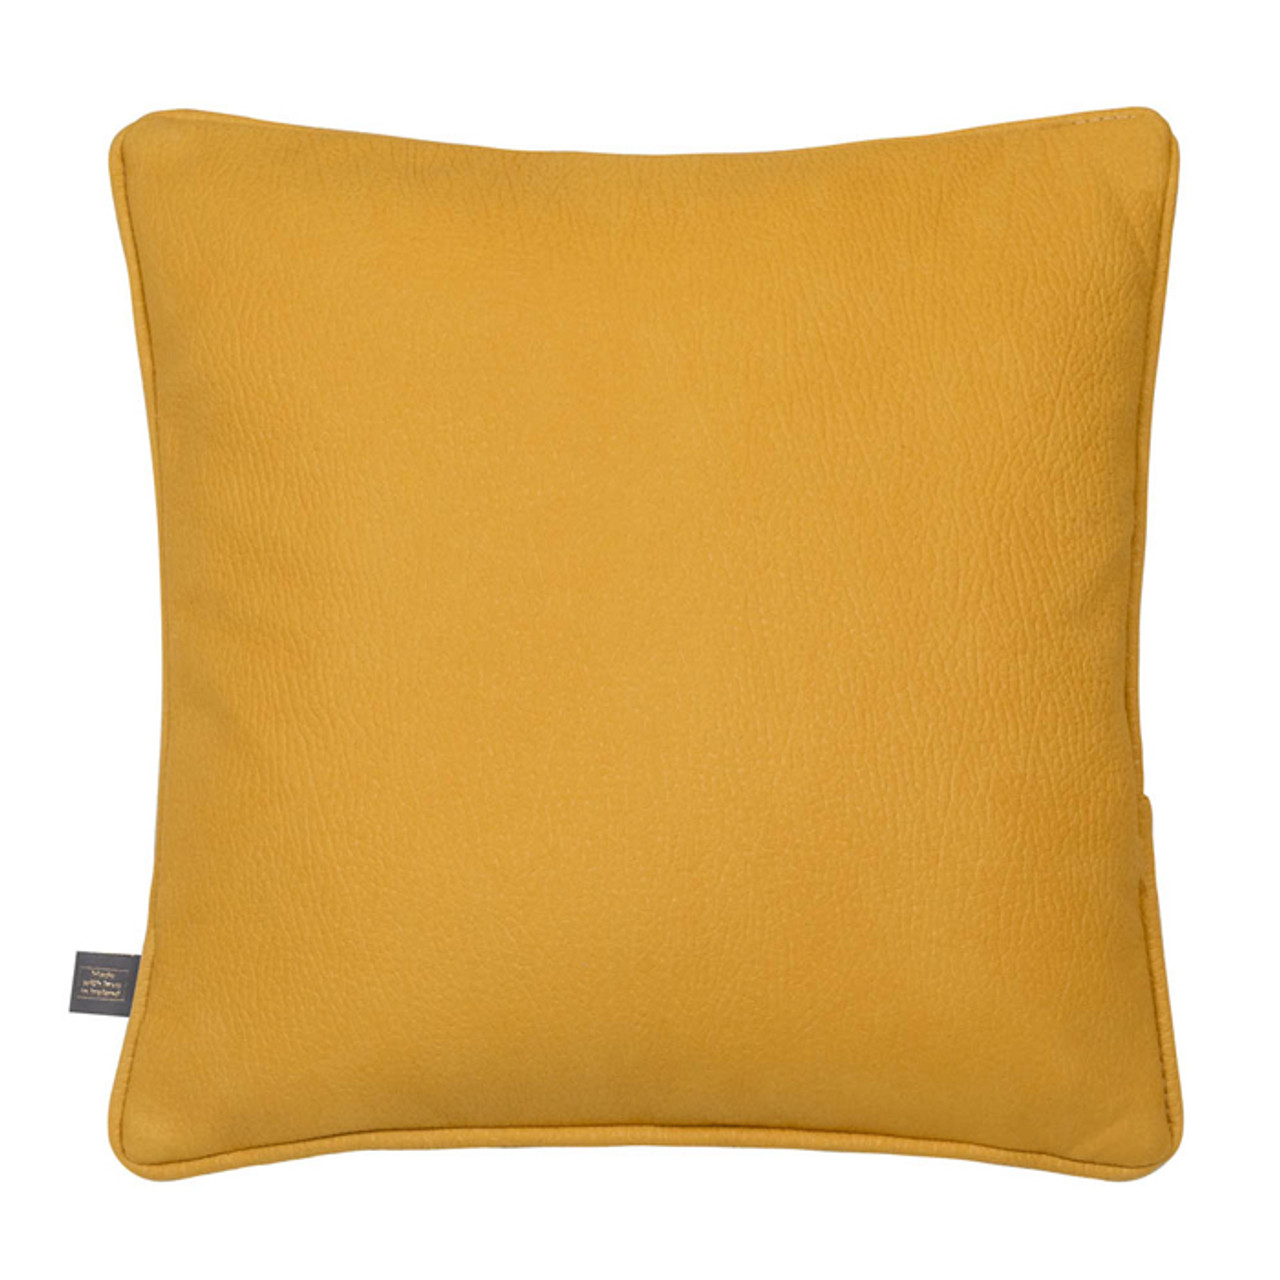 Chloe 43x43cm Cushion, Mustard *in-store